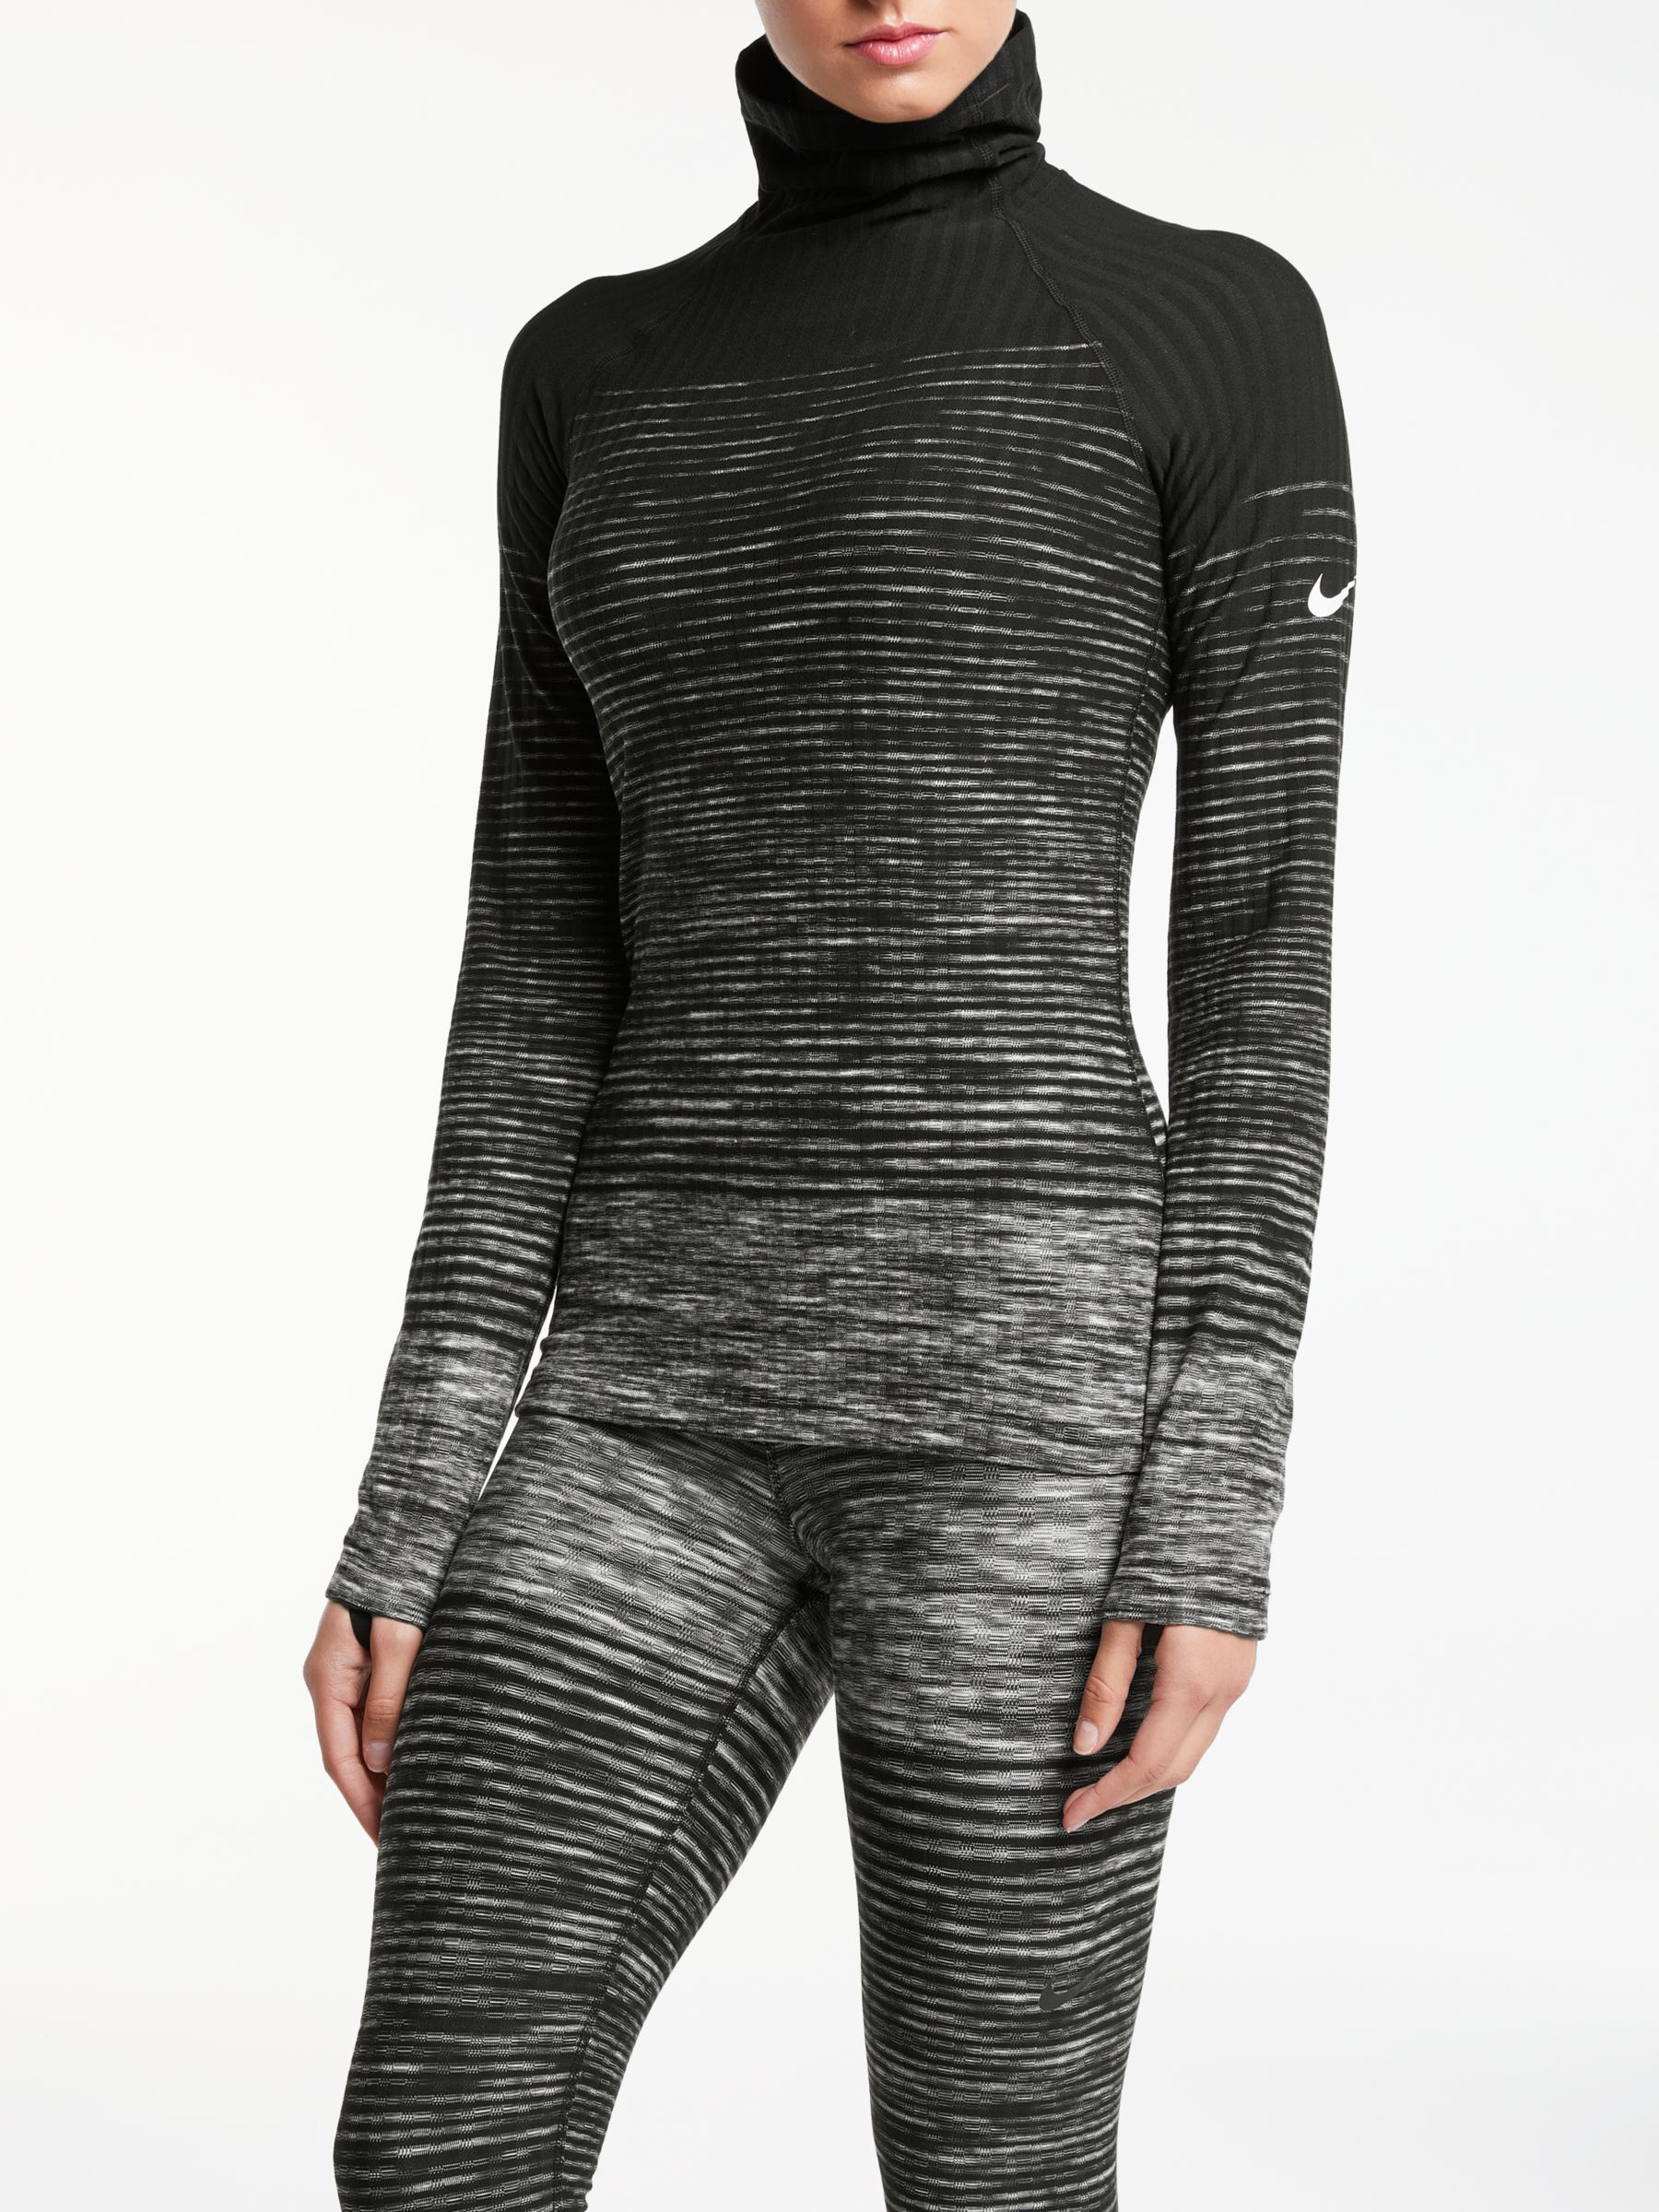 Nike Pro Hyperwarm Training Top, Dark Grey/White